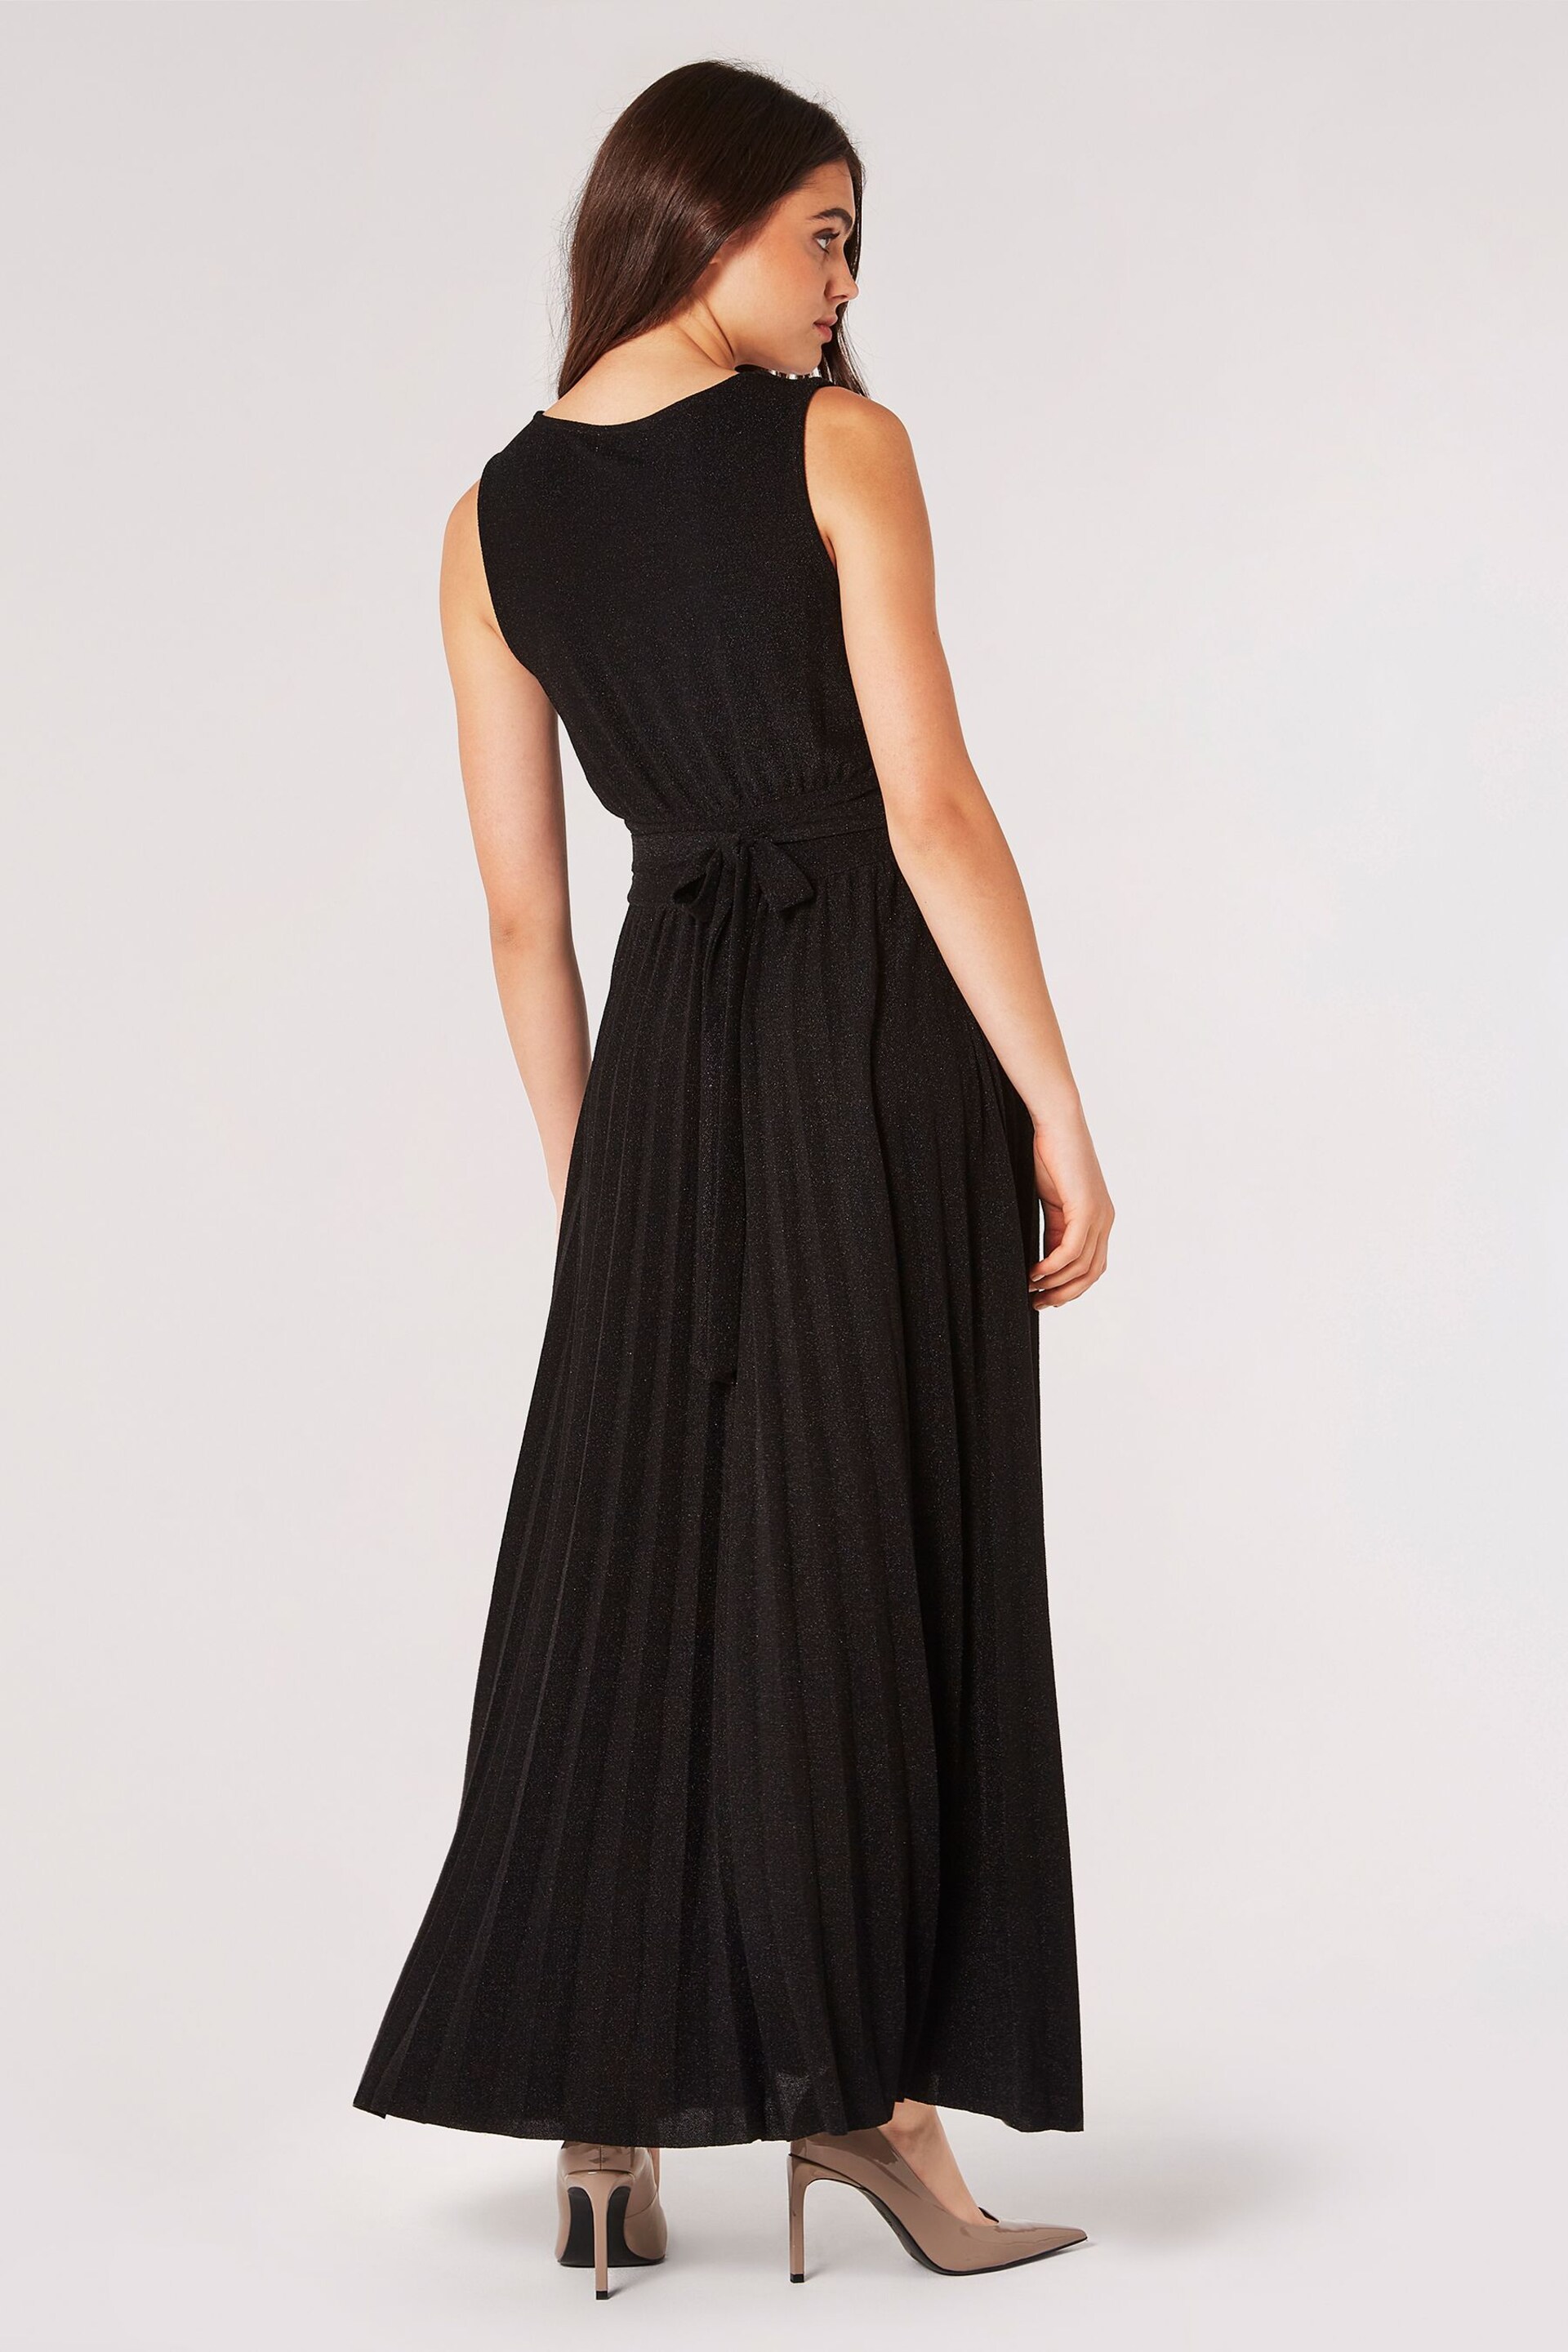 Apricot Black Sparkle Pleated Maxi Dress - Image 2 of 5